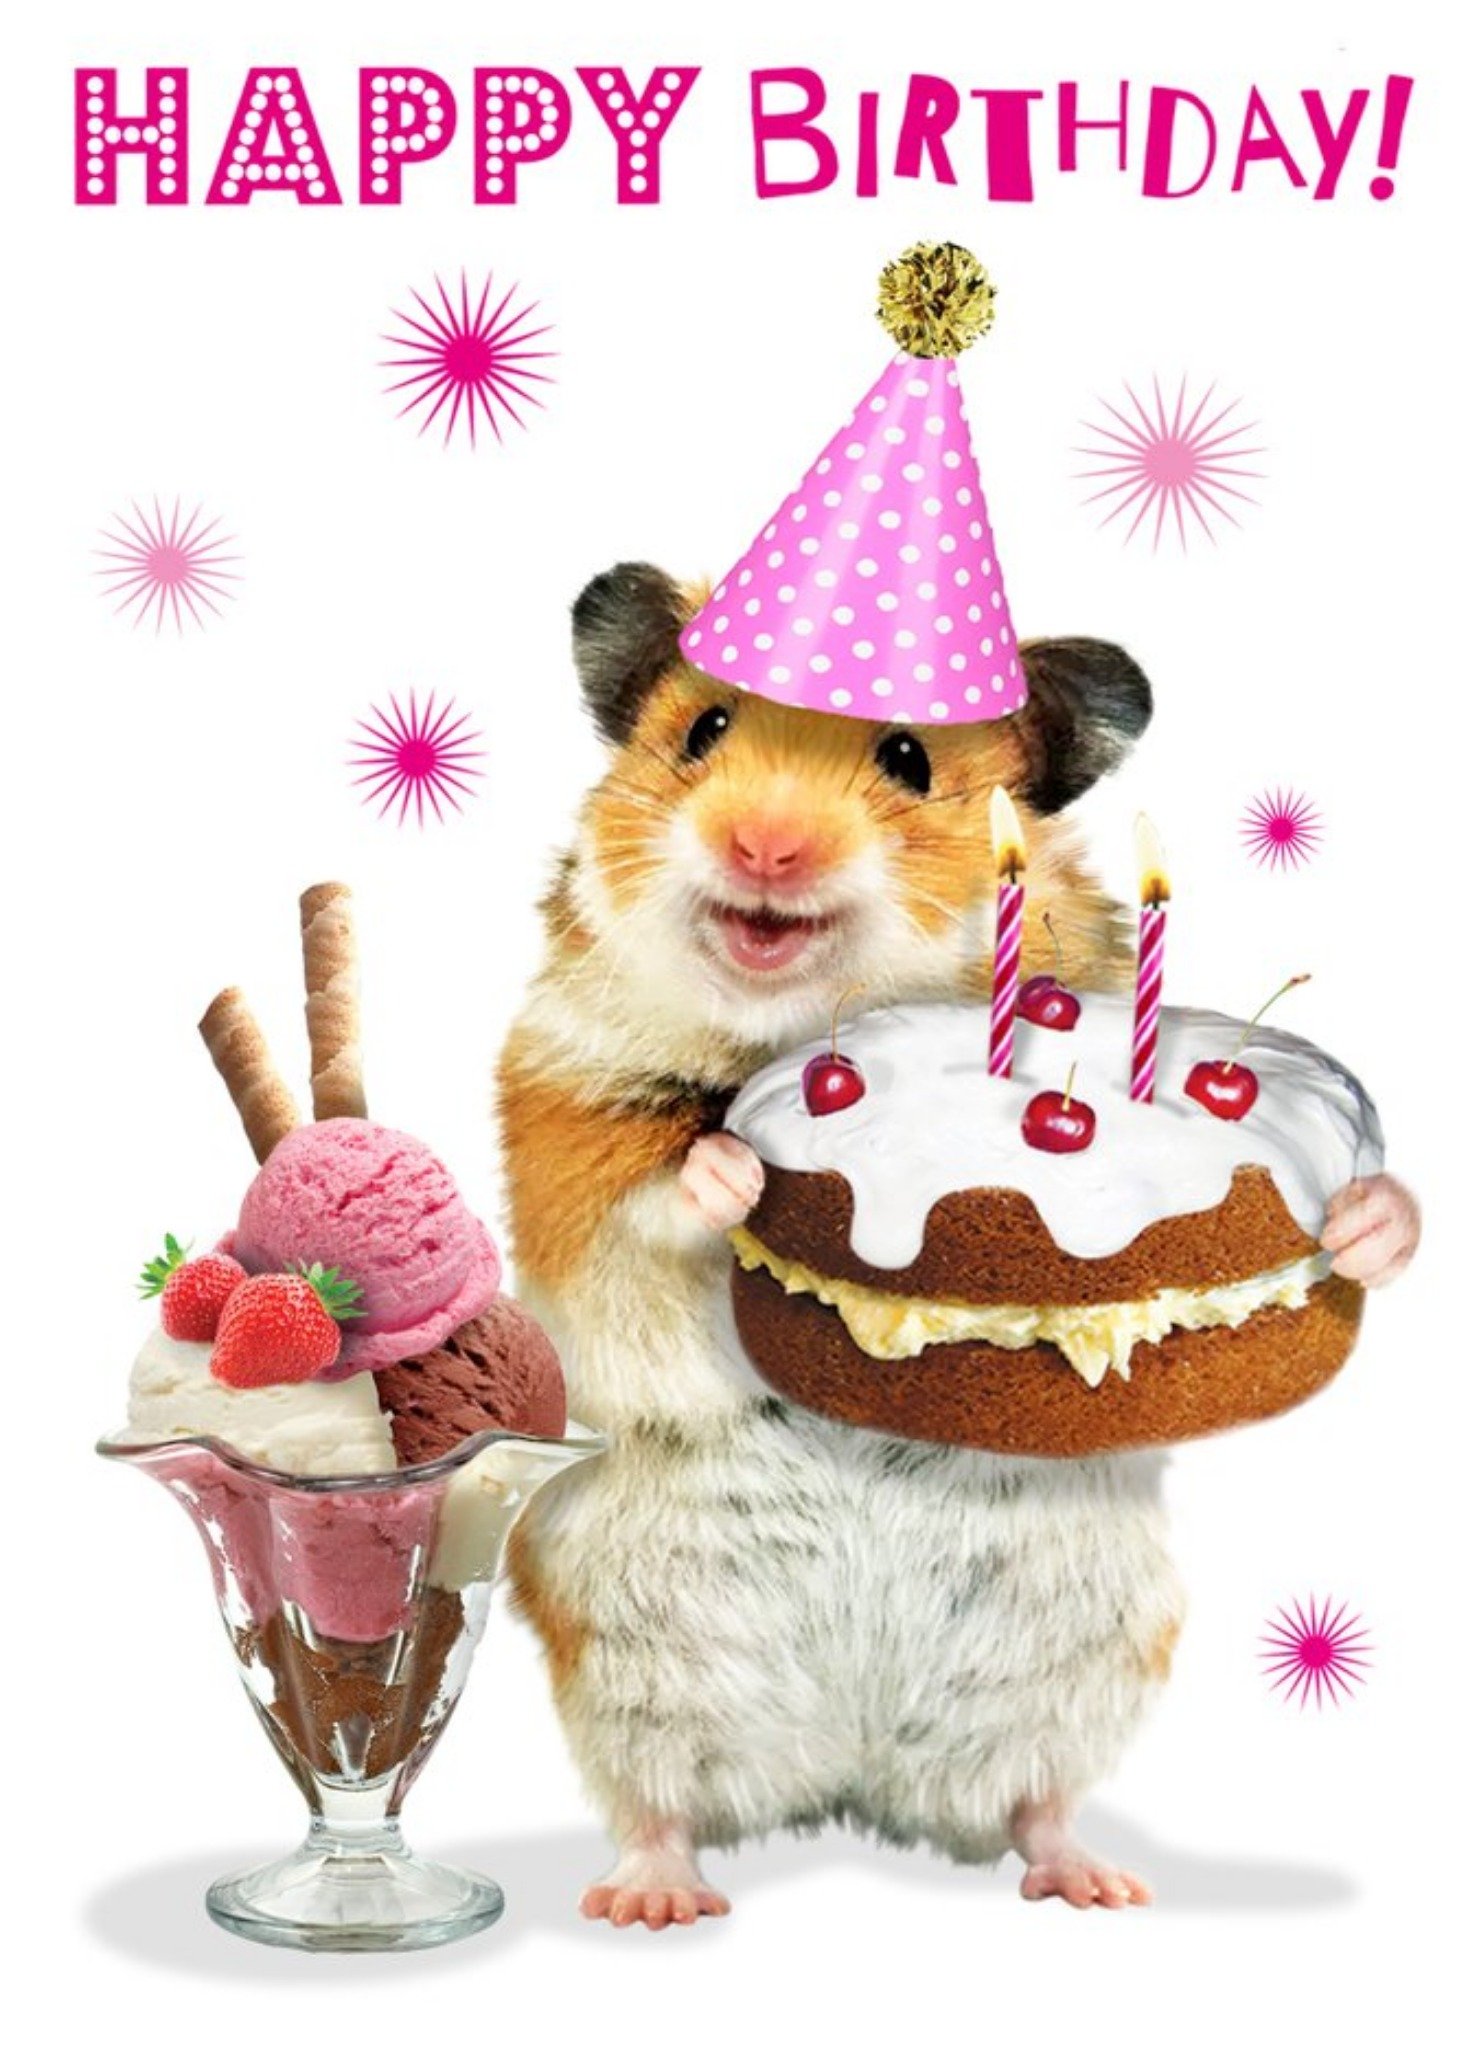 Moonpig Cute Hamster With Cake And Ice Cream Sundae Birthday Card, Large